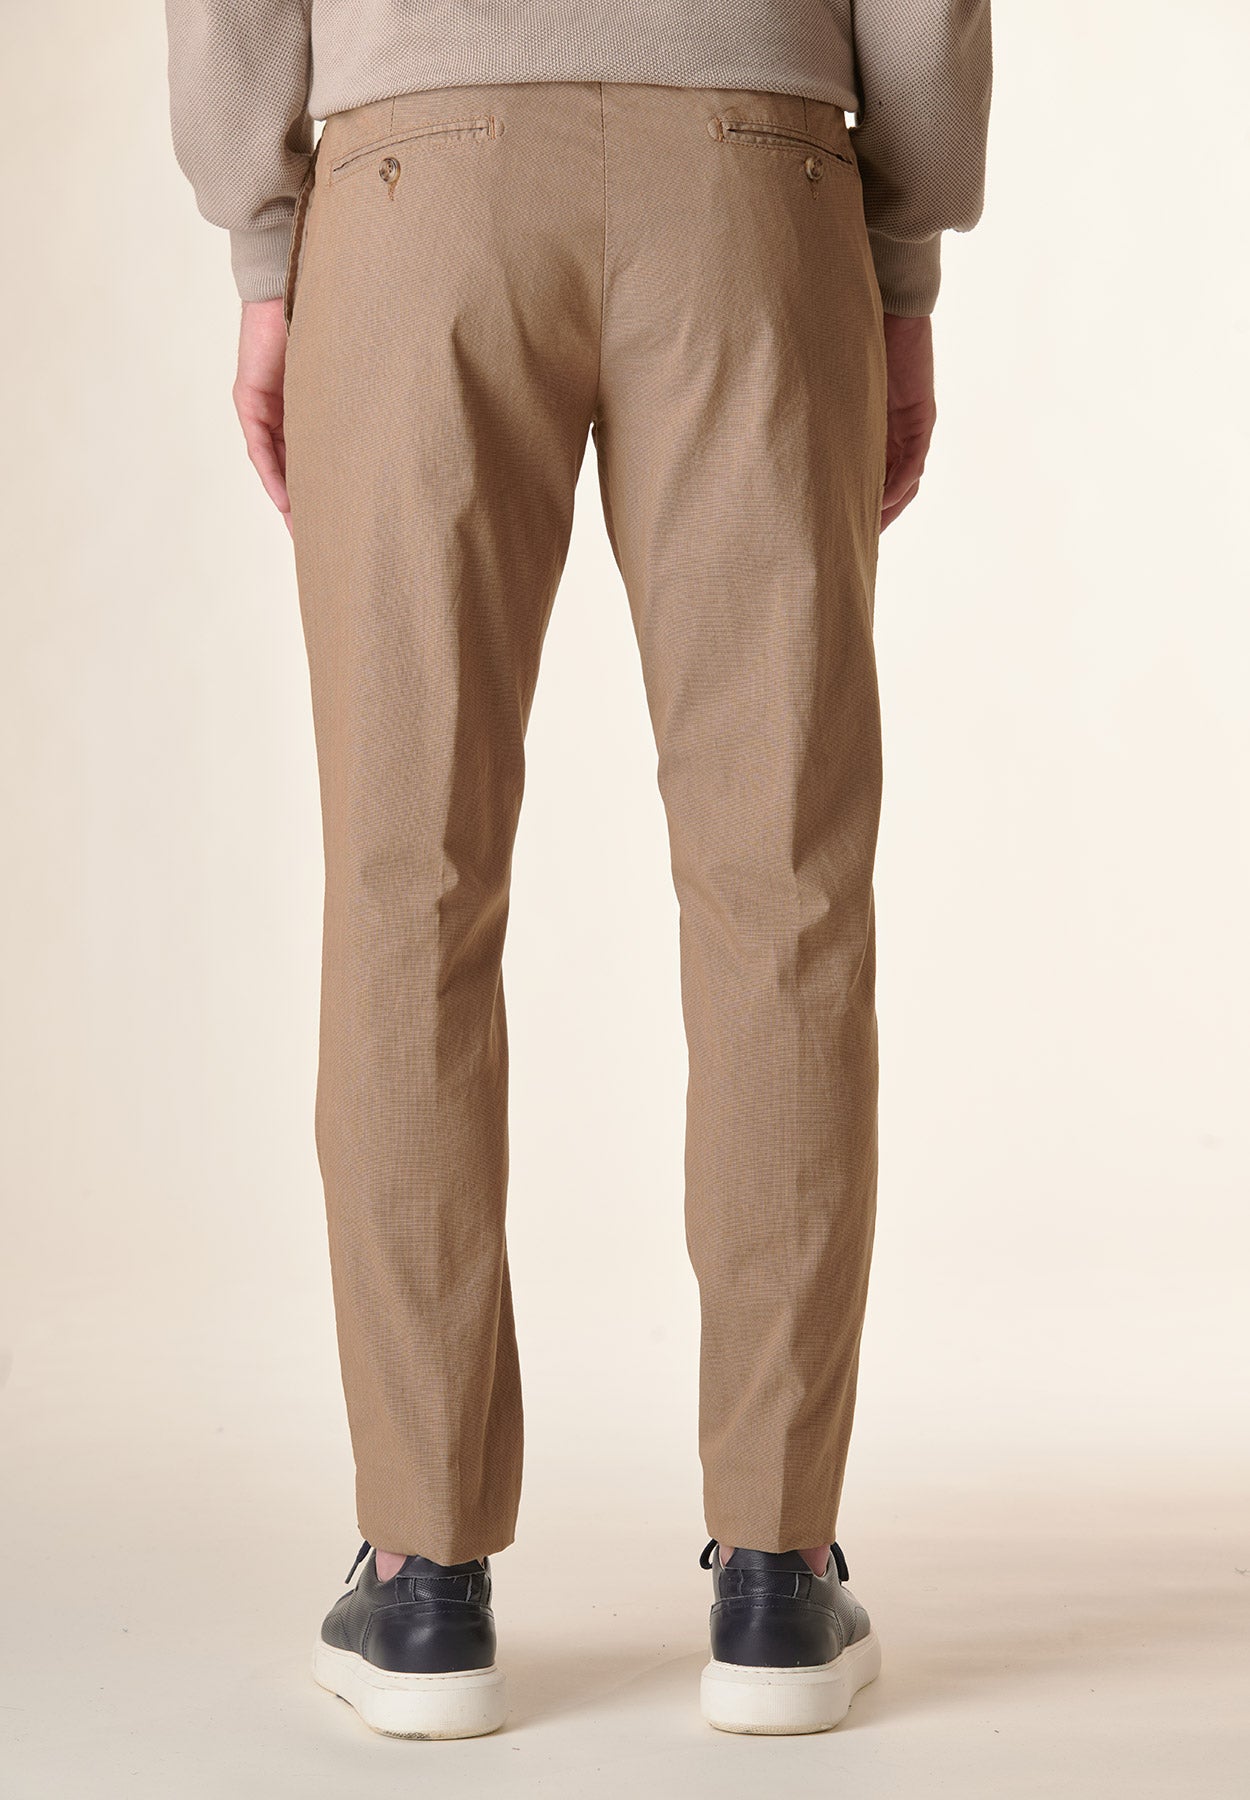 Pantalone cammello microarmatura cotone stretch regular fit